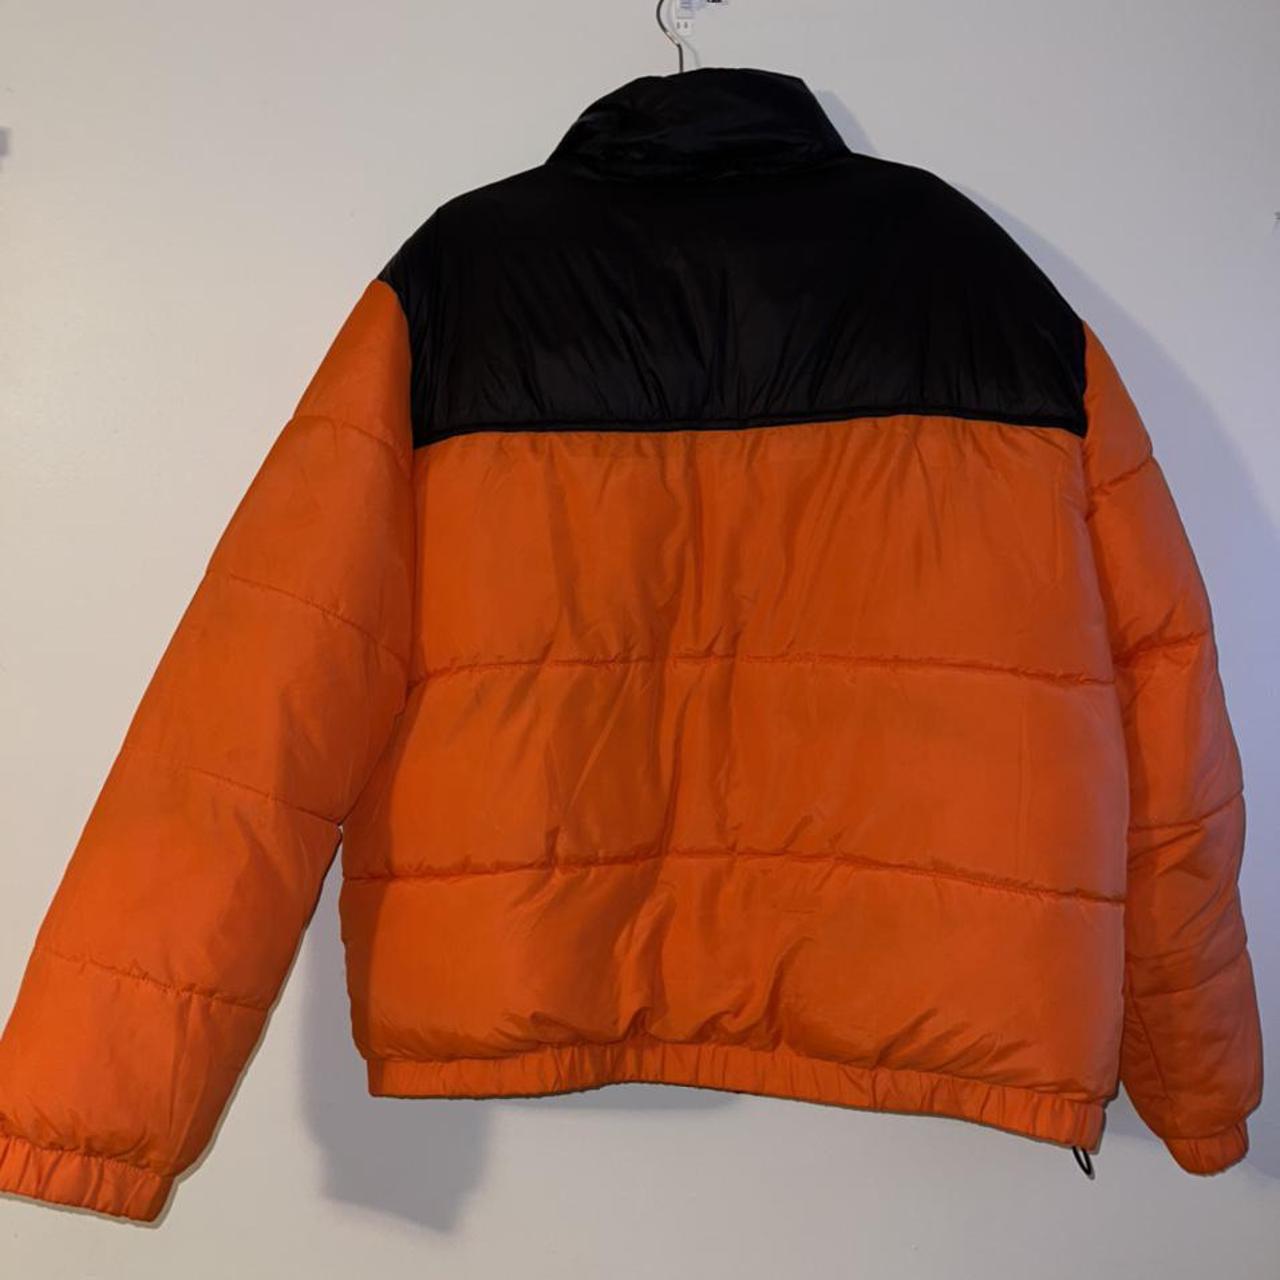 Used H&M Divided puffer coat in orange and black.... - Depop